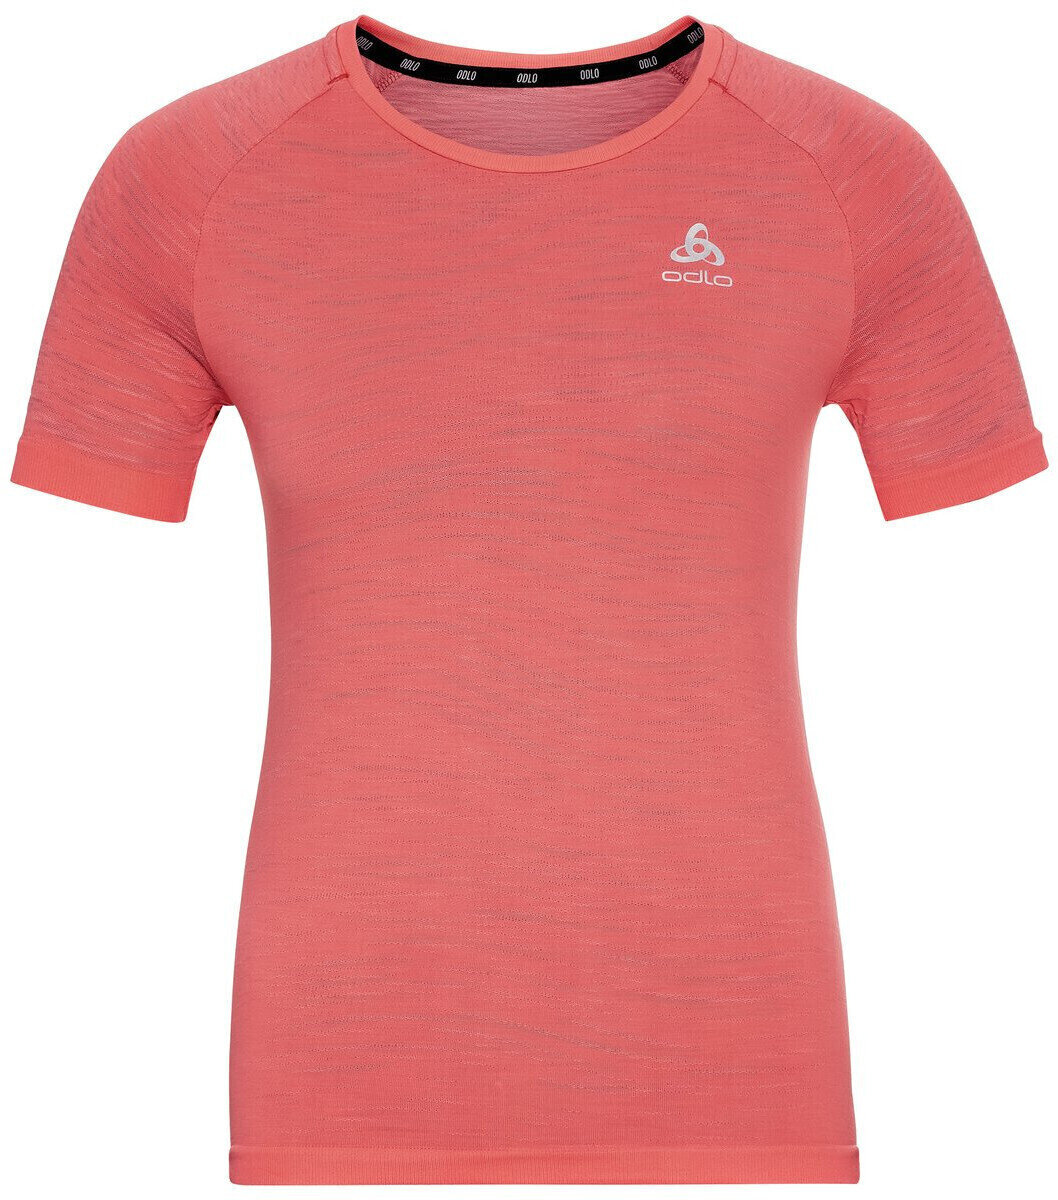 Running t-shirt with short sleeves
 Odlo Blackcomb Ceramicool T-Shirt Siesta/Space Dye S Running t-shirt with short sleeves